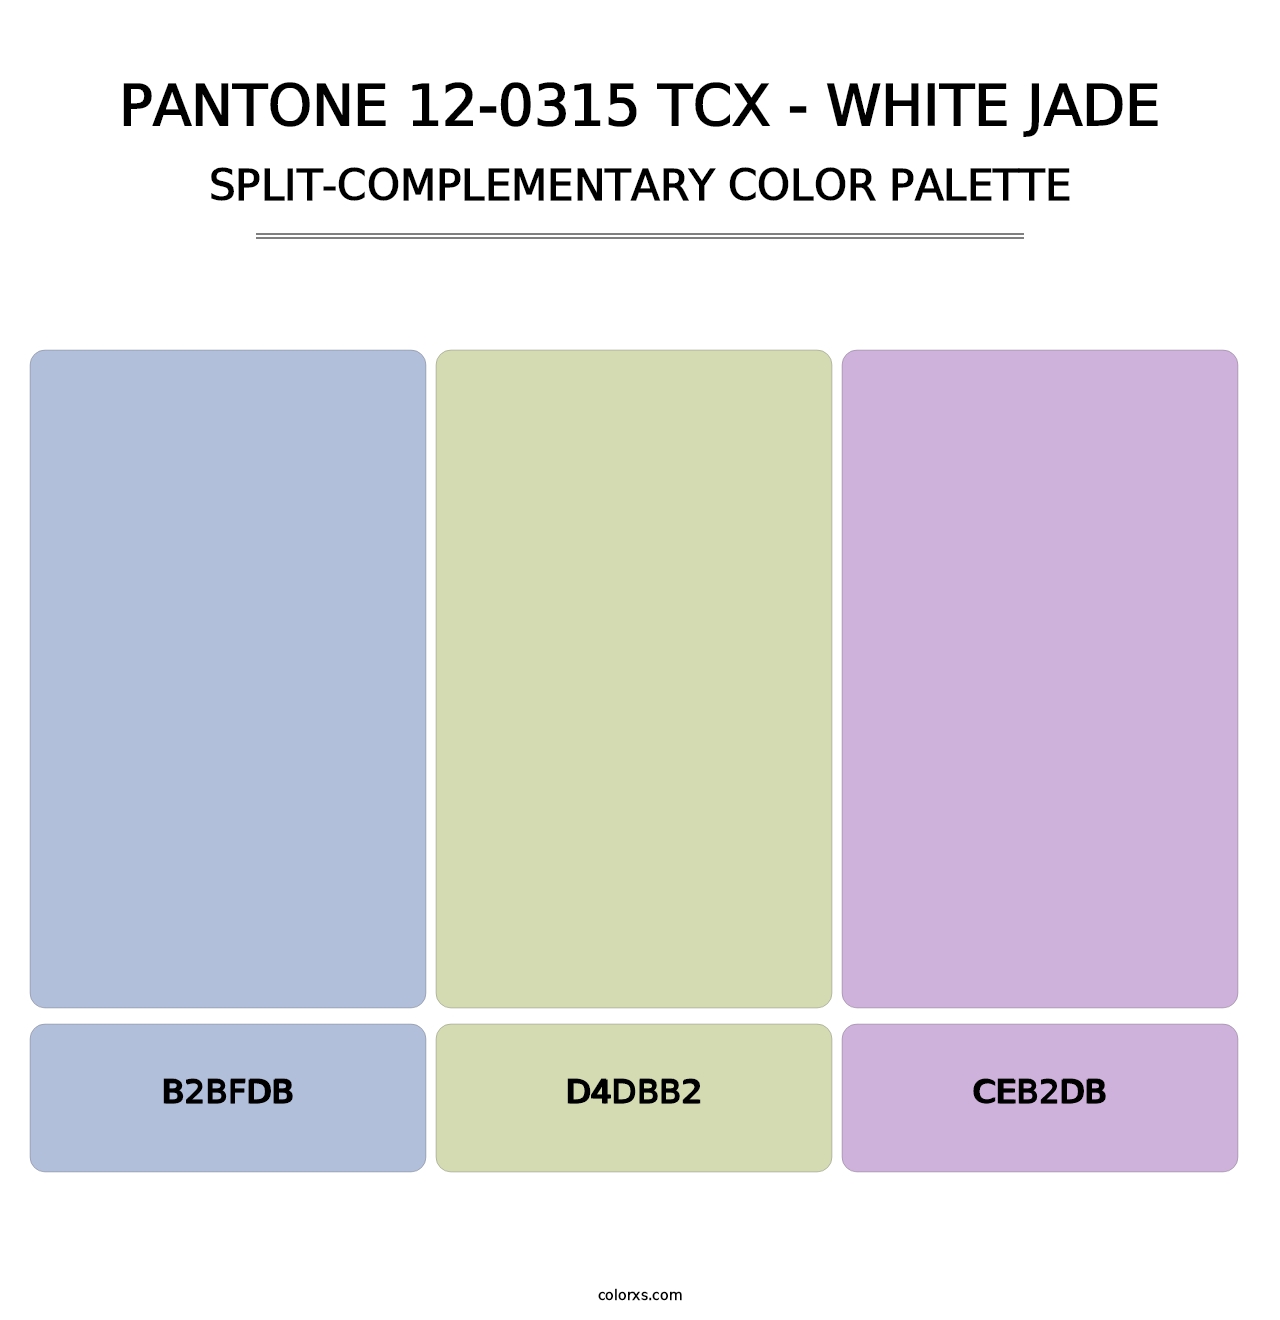 PANTONE 12-0315 TCX - White Jade - Split-Complementary Color Palette